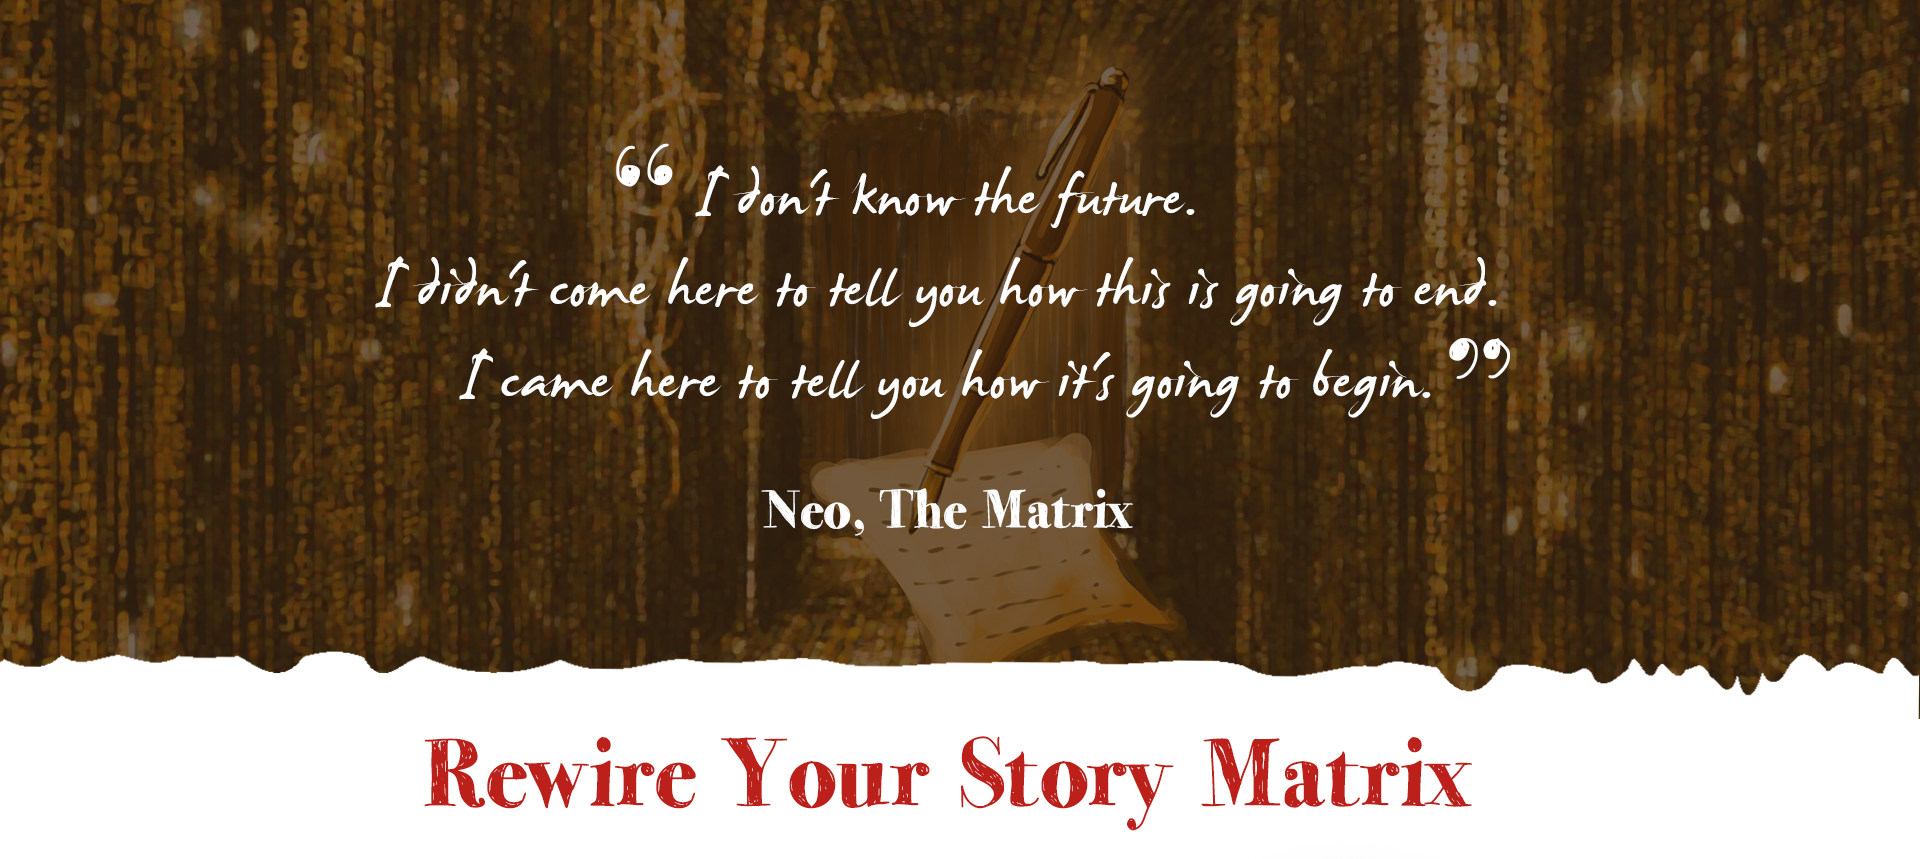 New Rewire Your Story Matrix